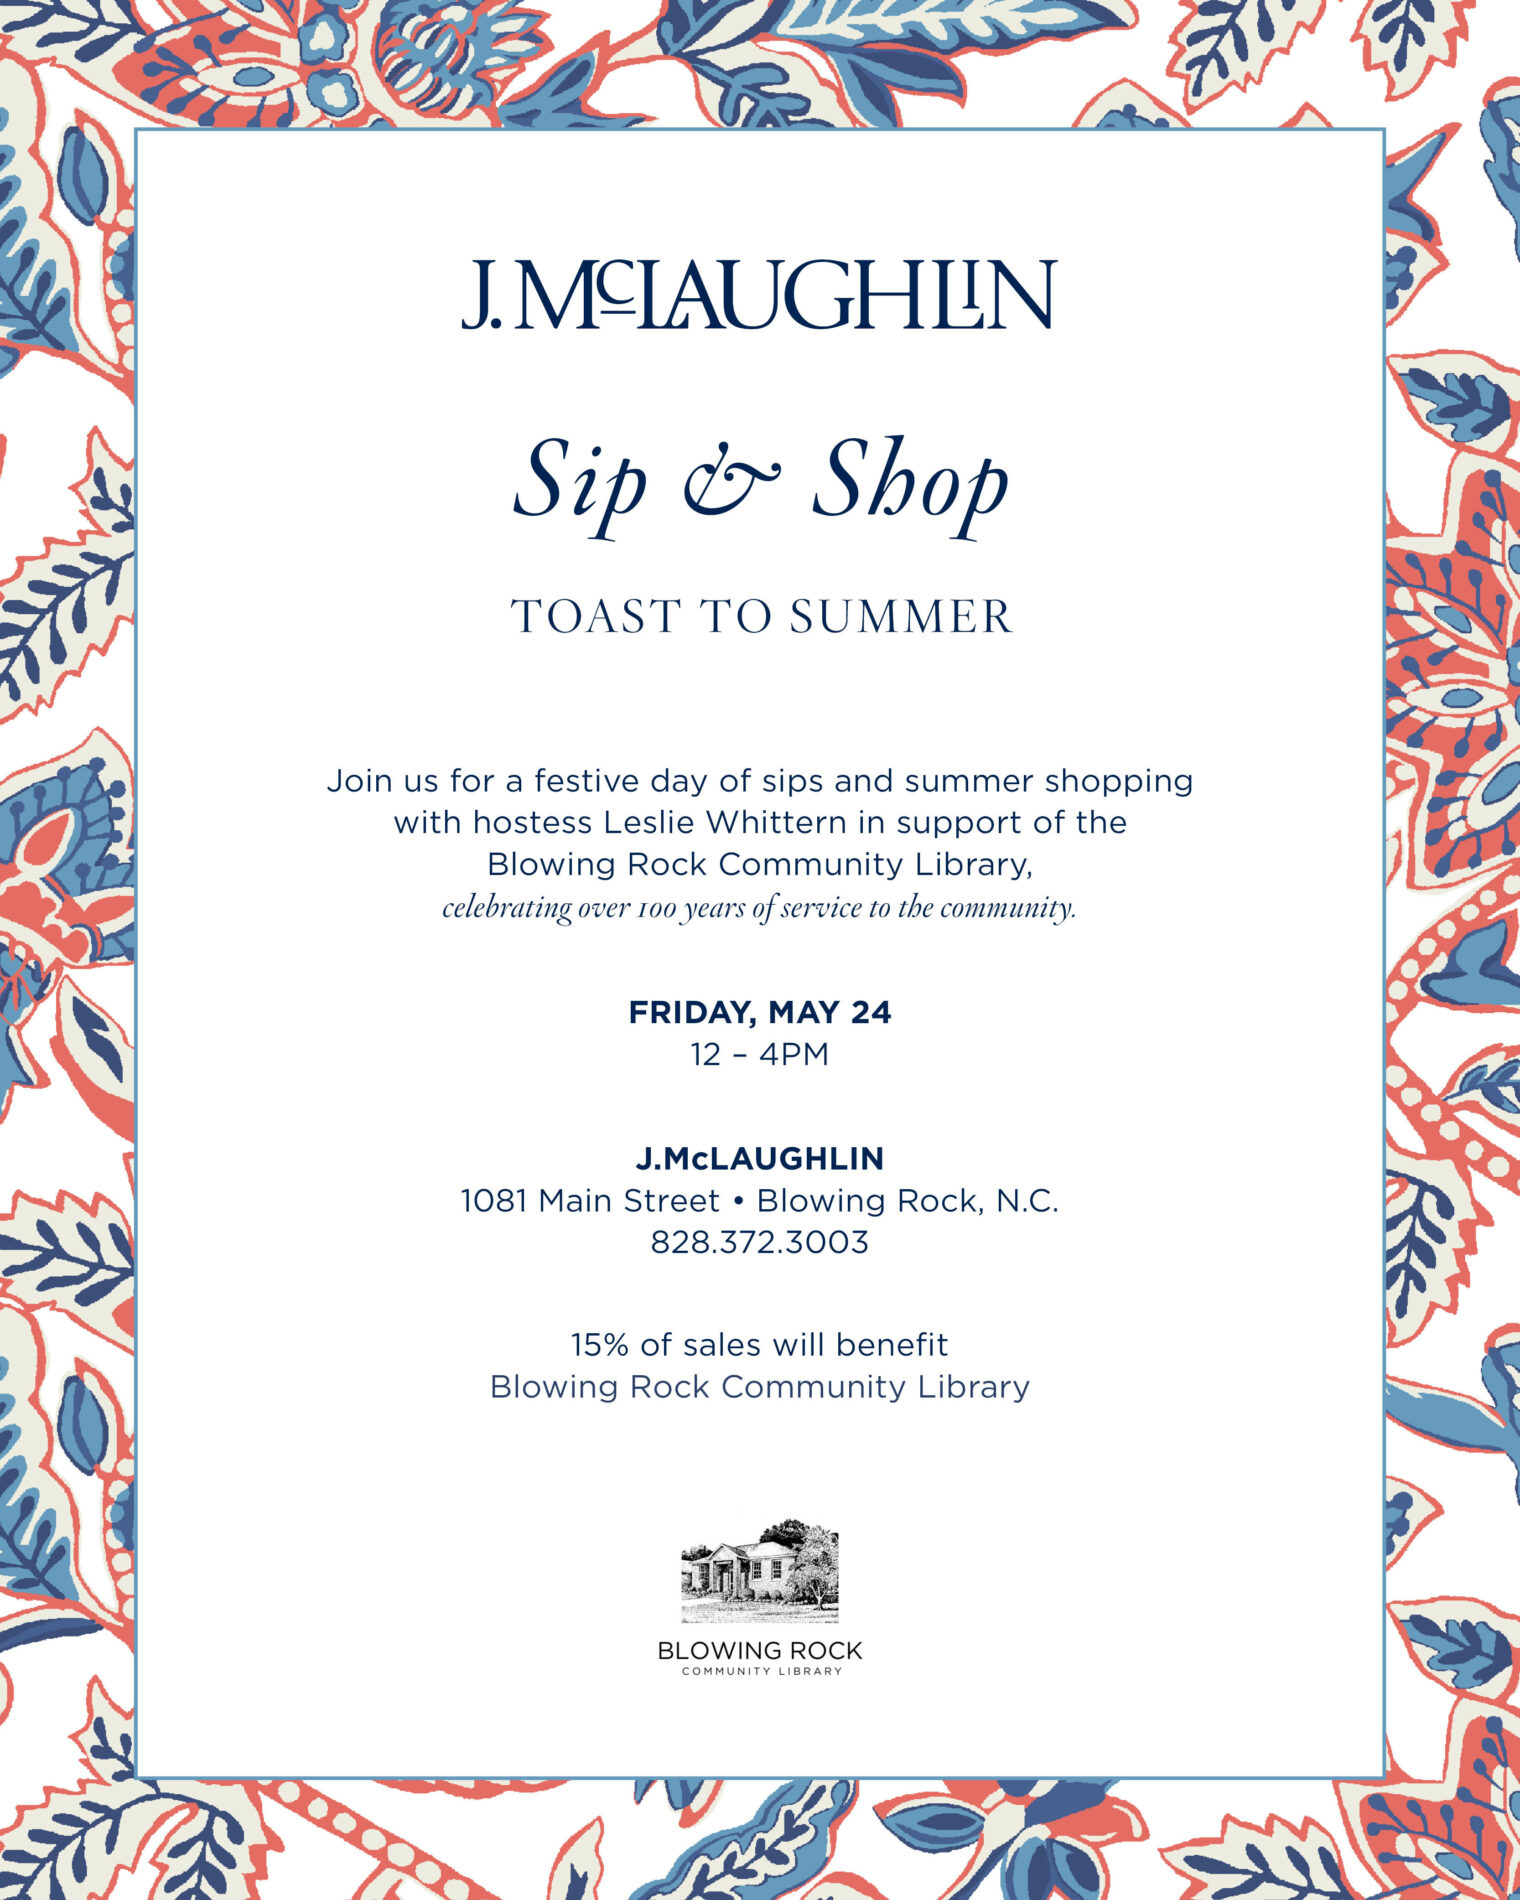 Sip & Shop at J. McLaughlin – Toast to Summer